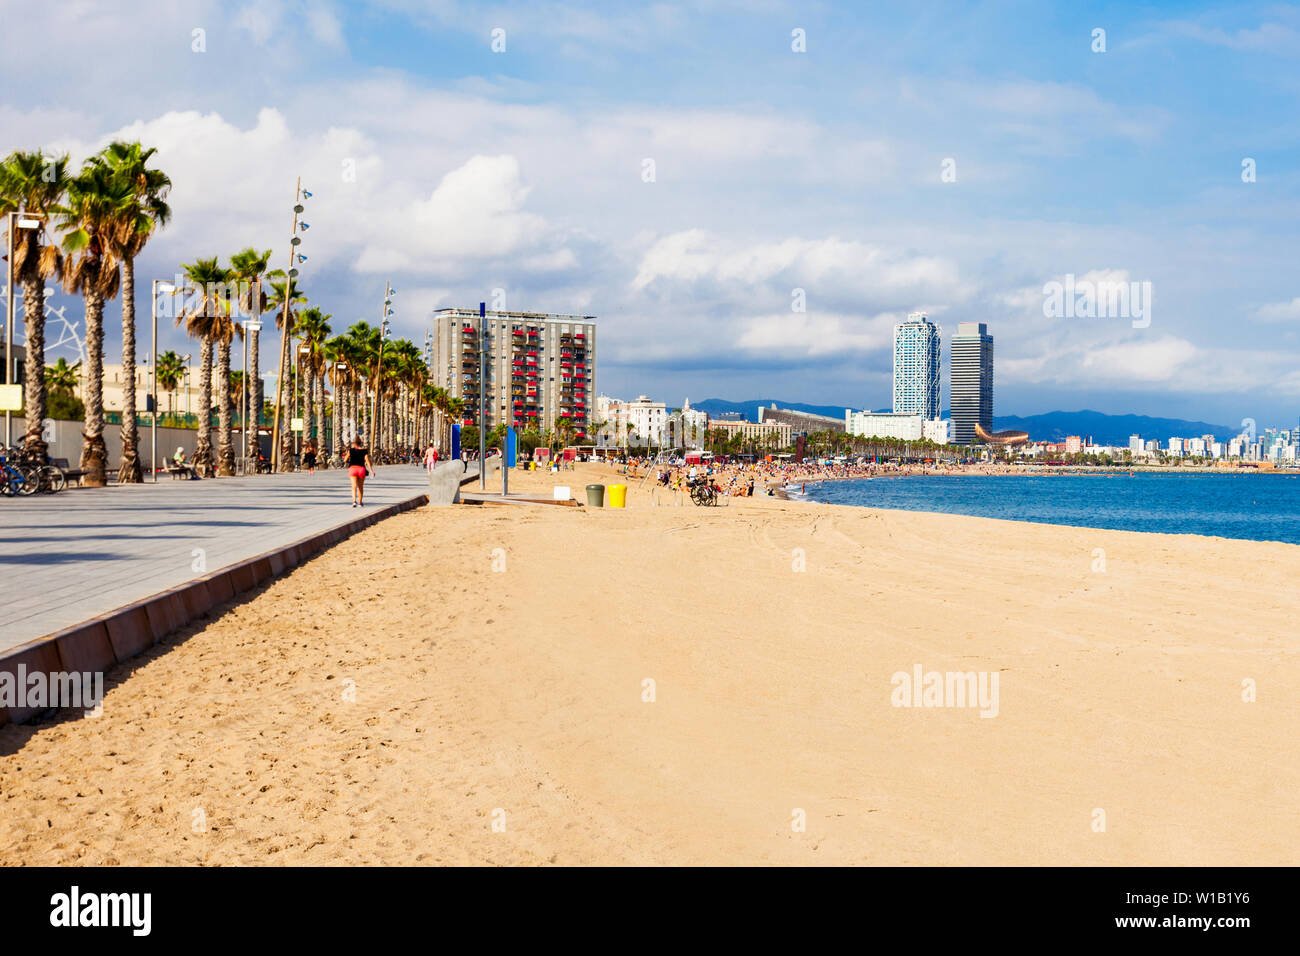 Playa De La Barceloneta City Beach In The Centre Of Barcelona City Catalonia Region Of Spain Stock Photo Alamy